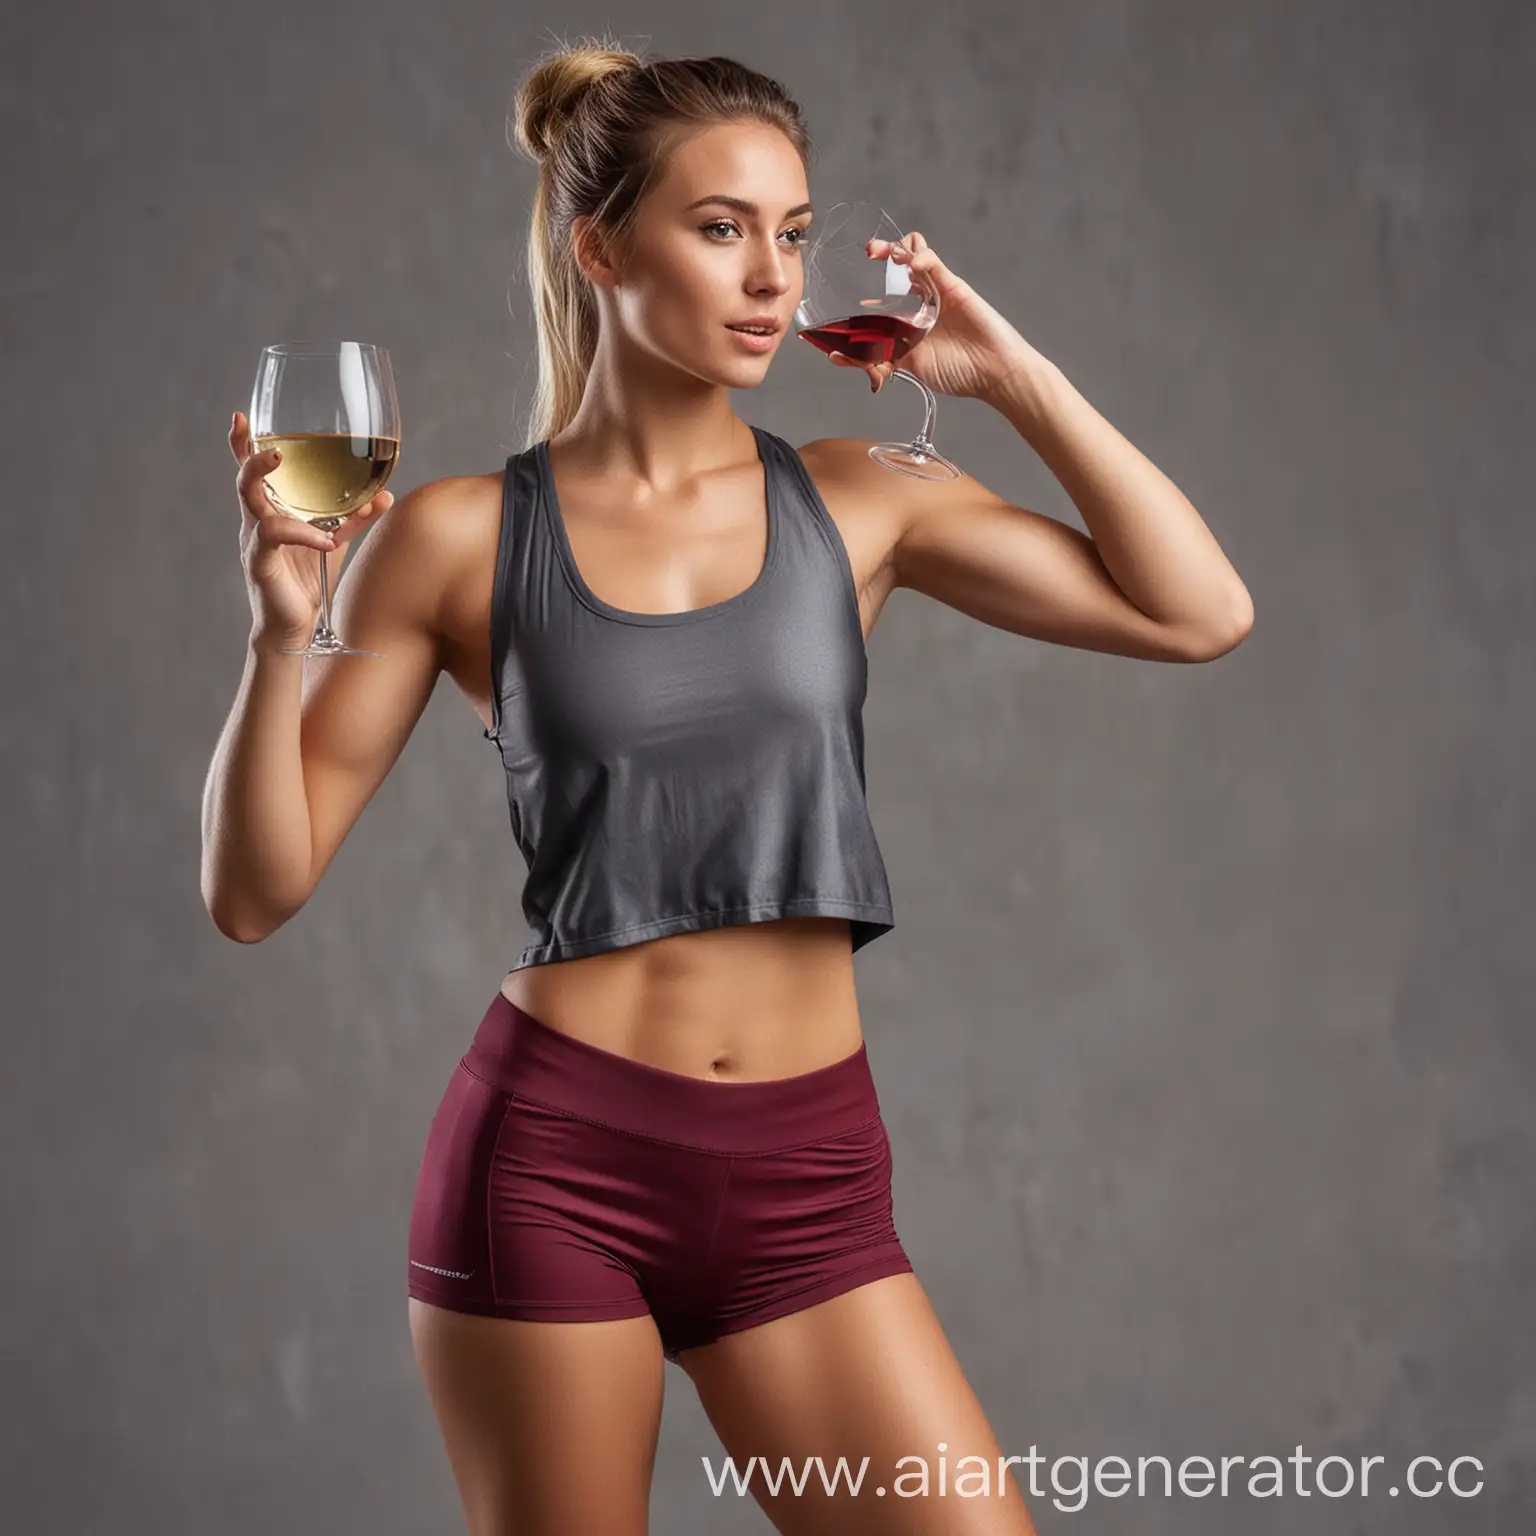 Sporty-Chic-Female-Athlete-Enjoying-a-Glass-of-Wine